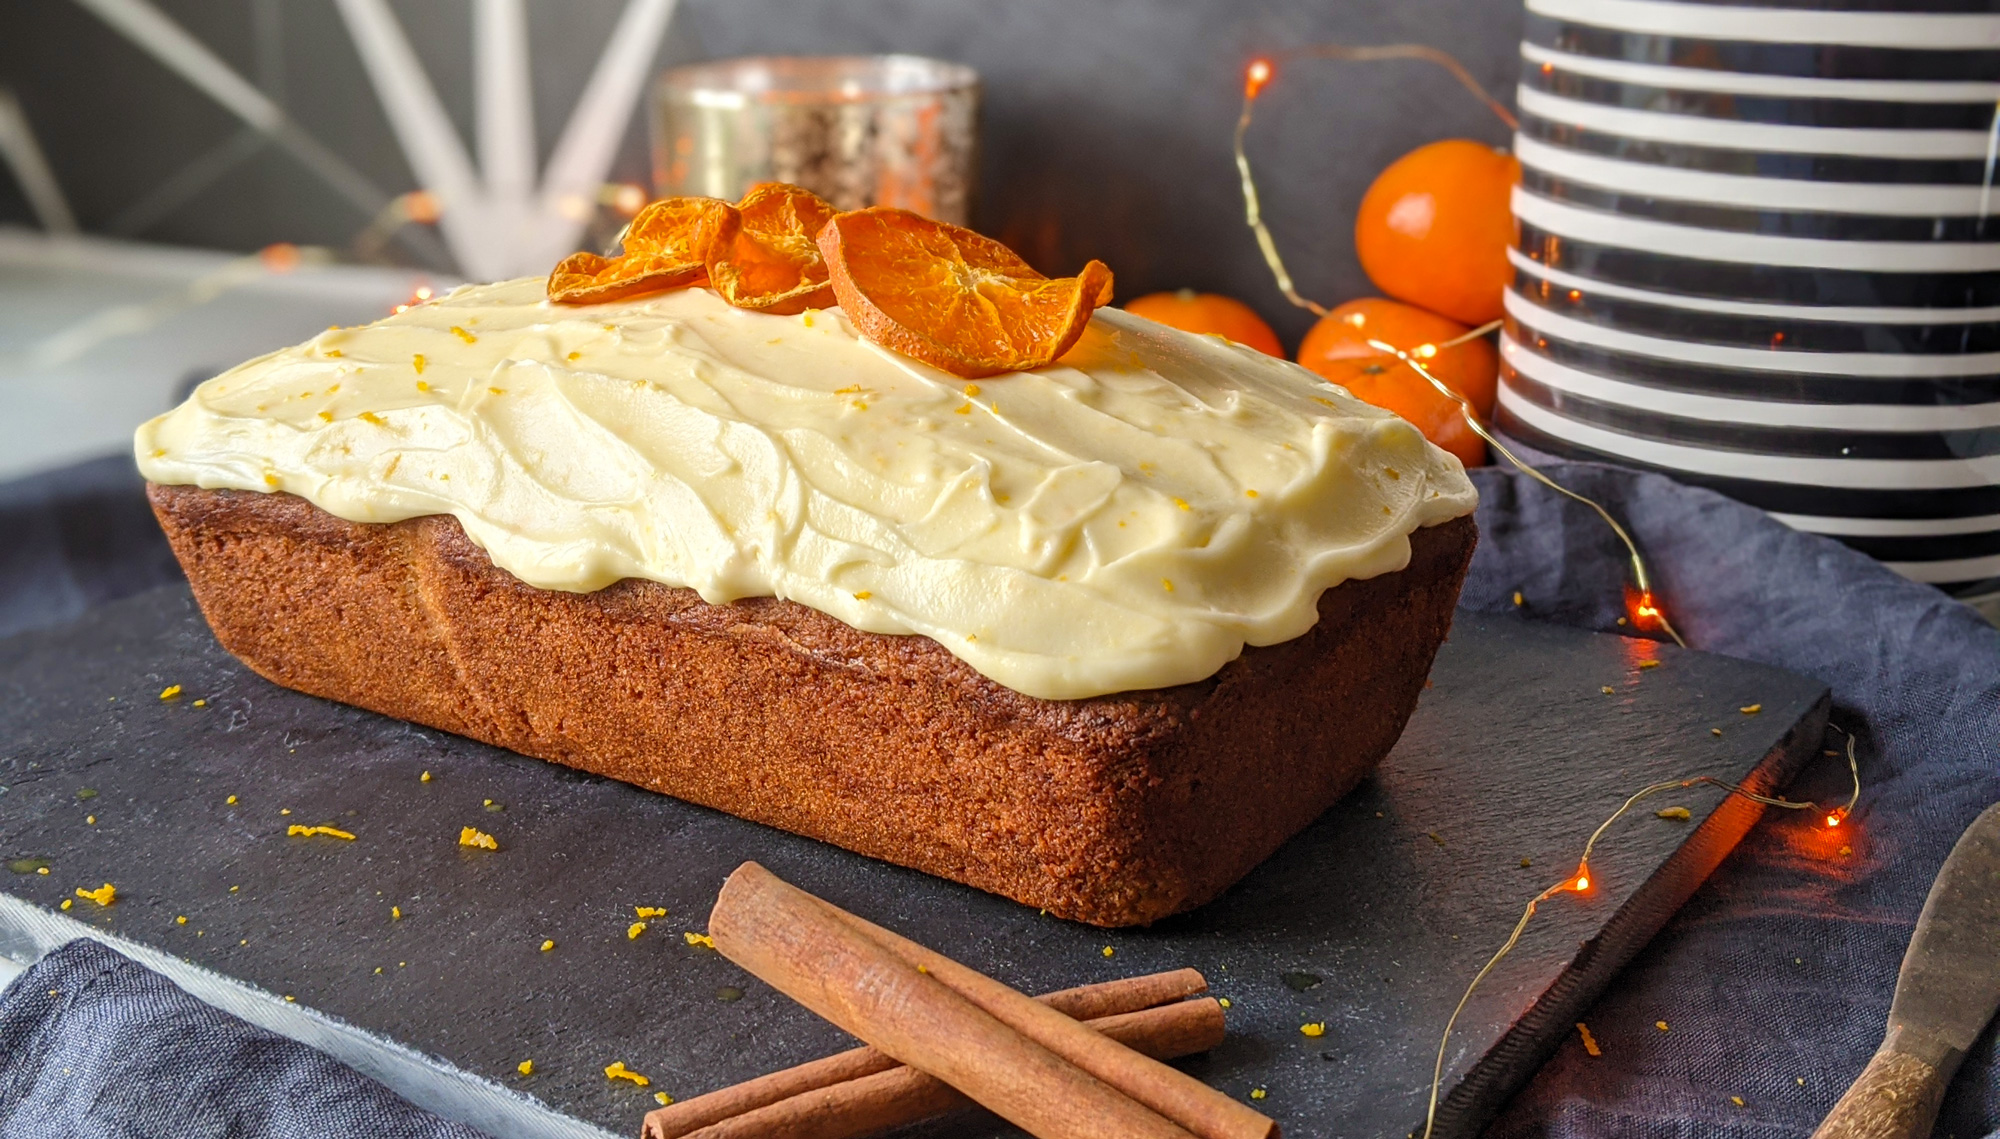 Spiced Orange Loaf Cake with Mascarpone Frosting (Gluten Free Recipe)